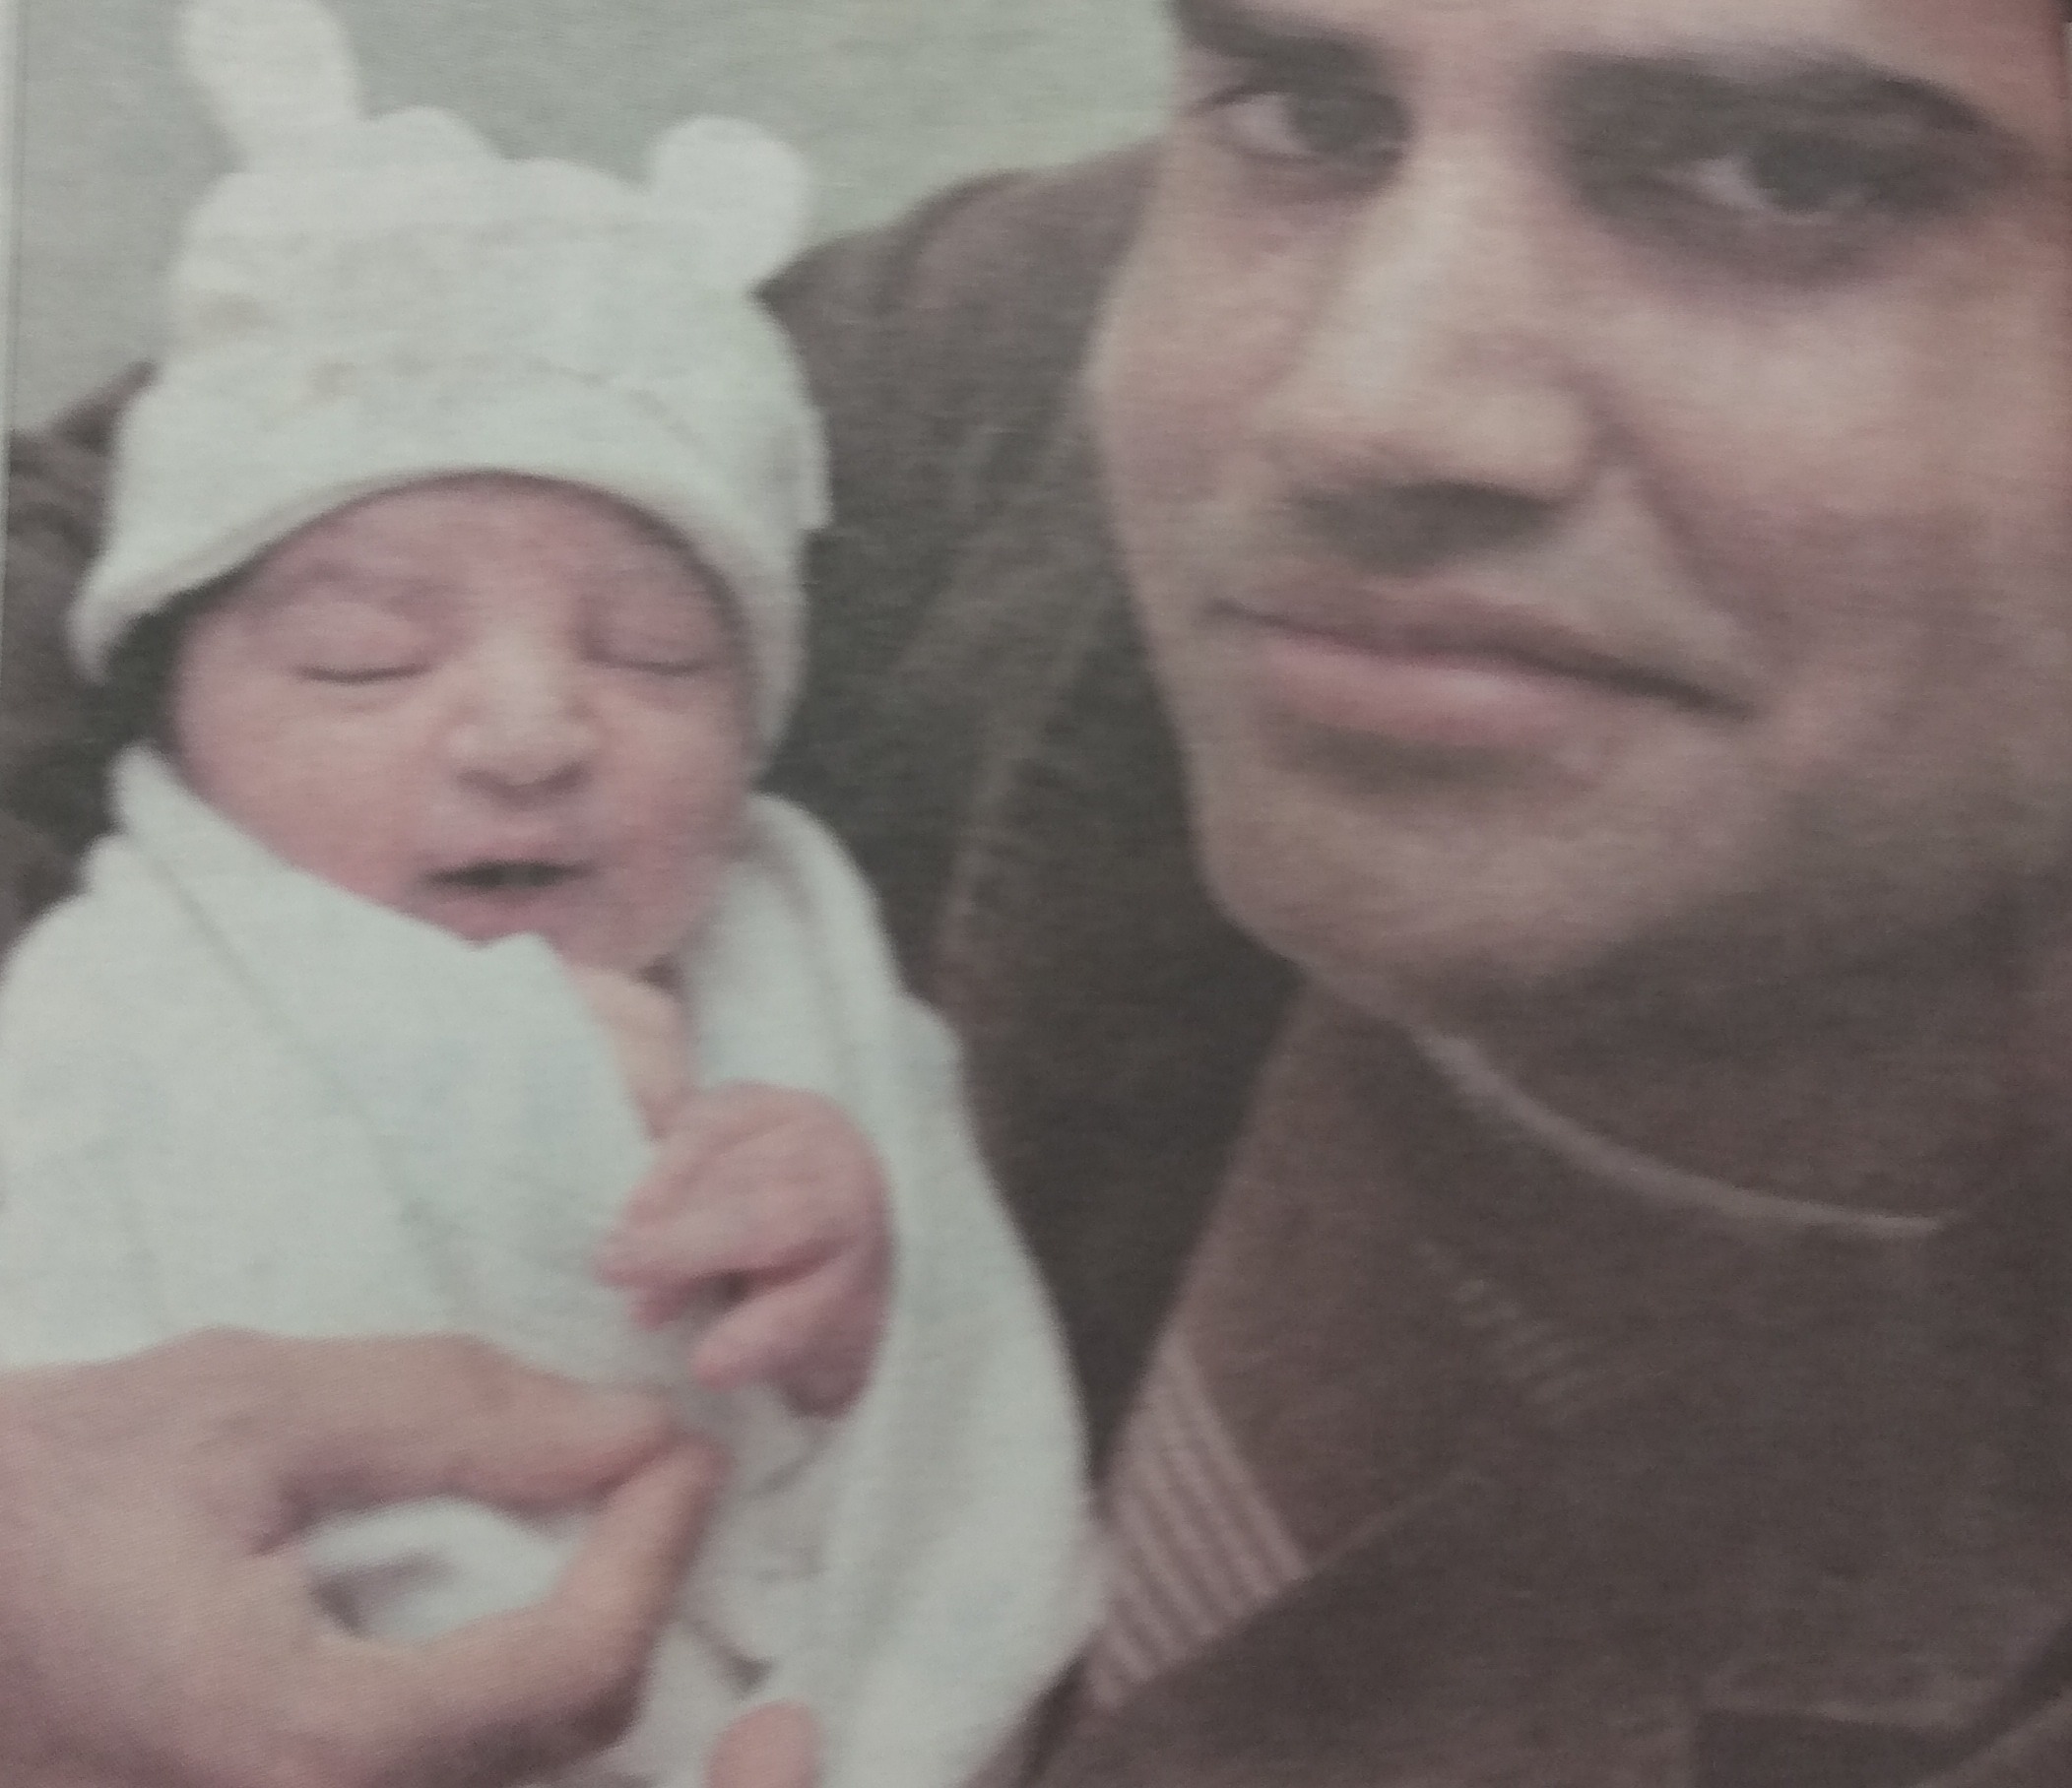 Usman Ali and his son, Hamzah Ali